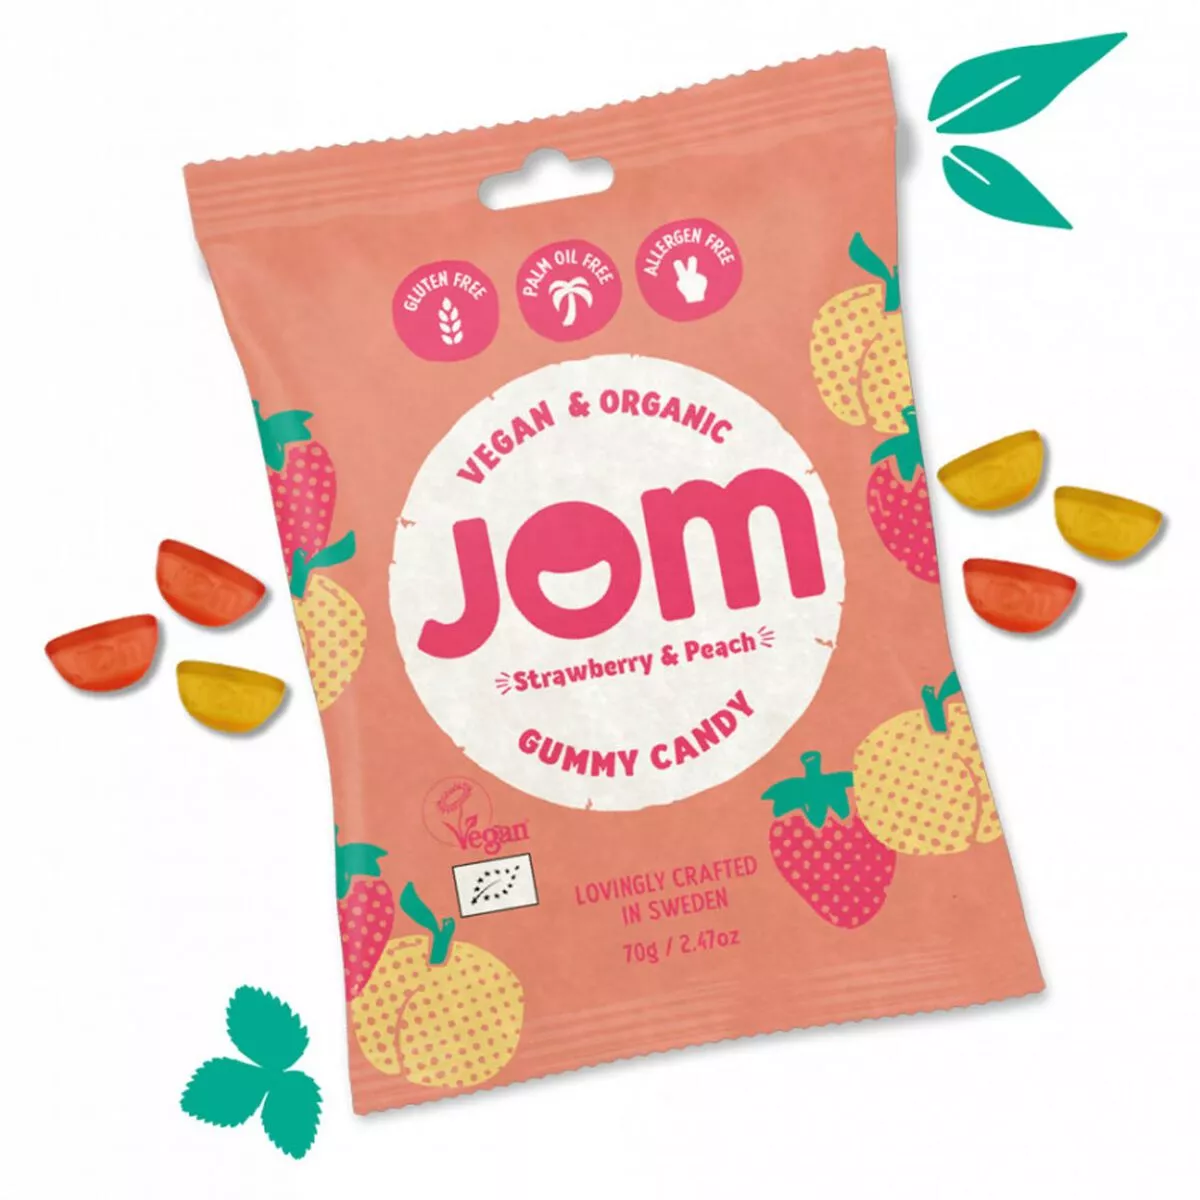 JOM Sour Strawberry & Peach Gummy Candy, organic und vegan (70g) 1